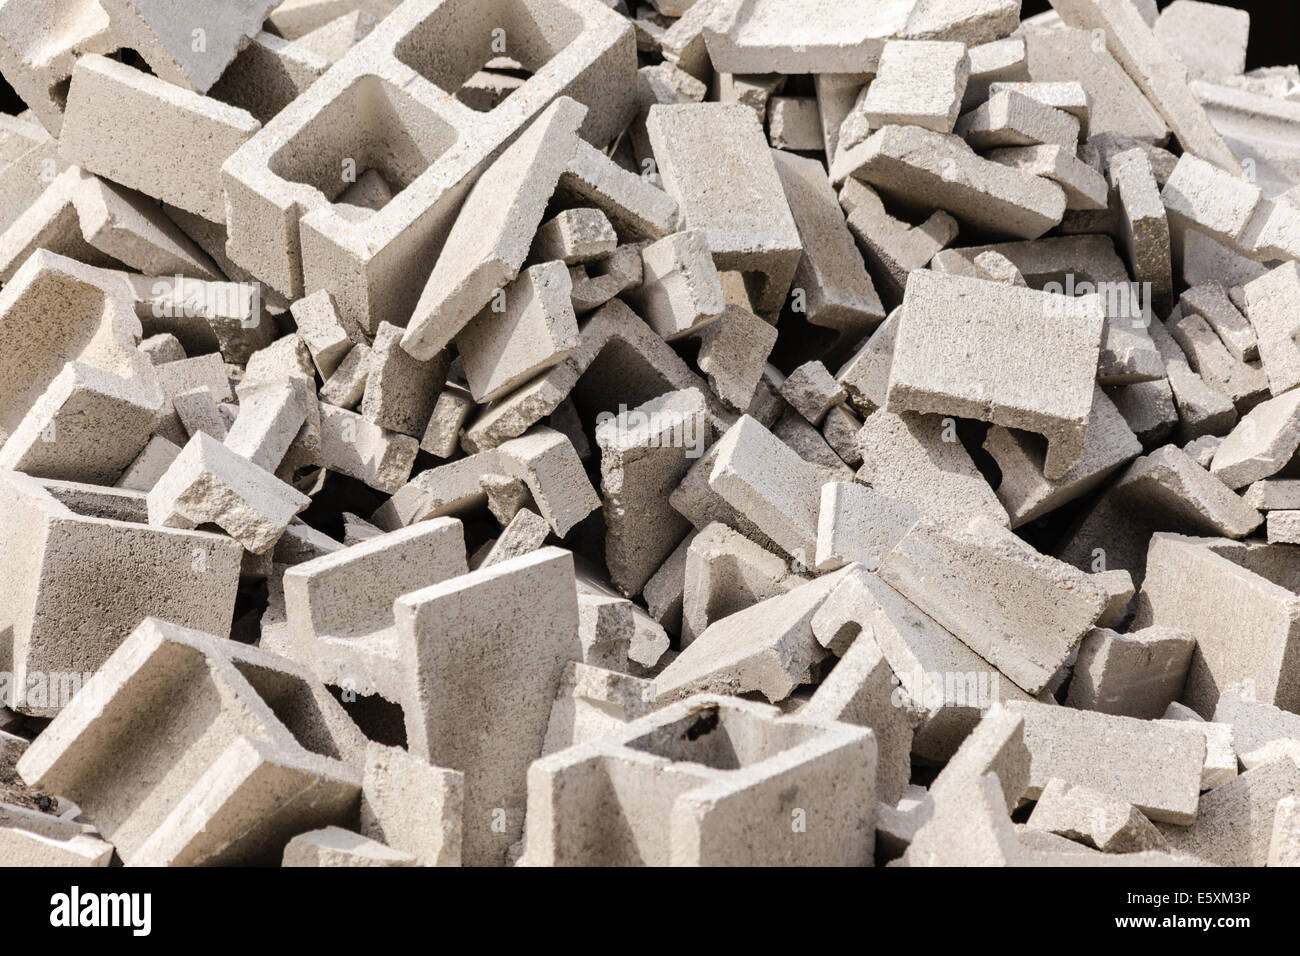 Pile of broken cinder blocks Stock Photo